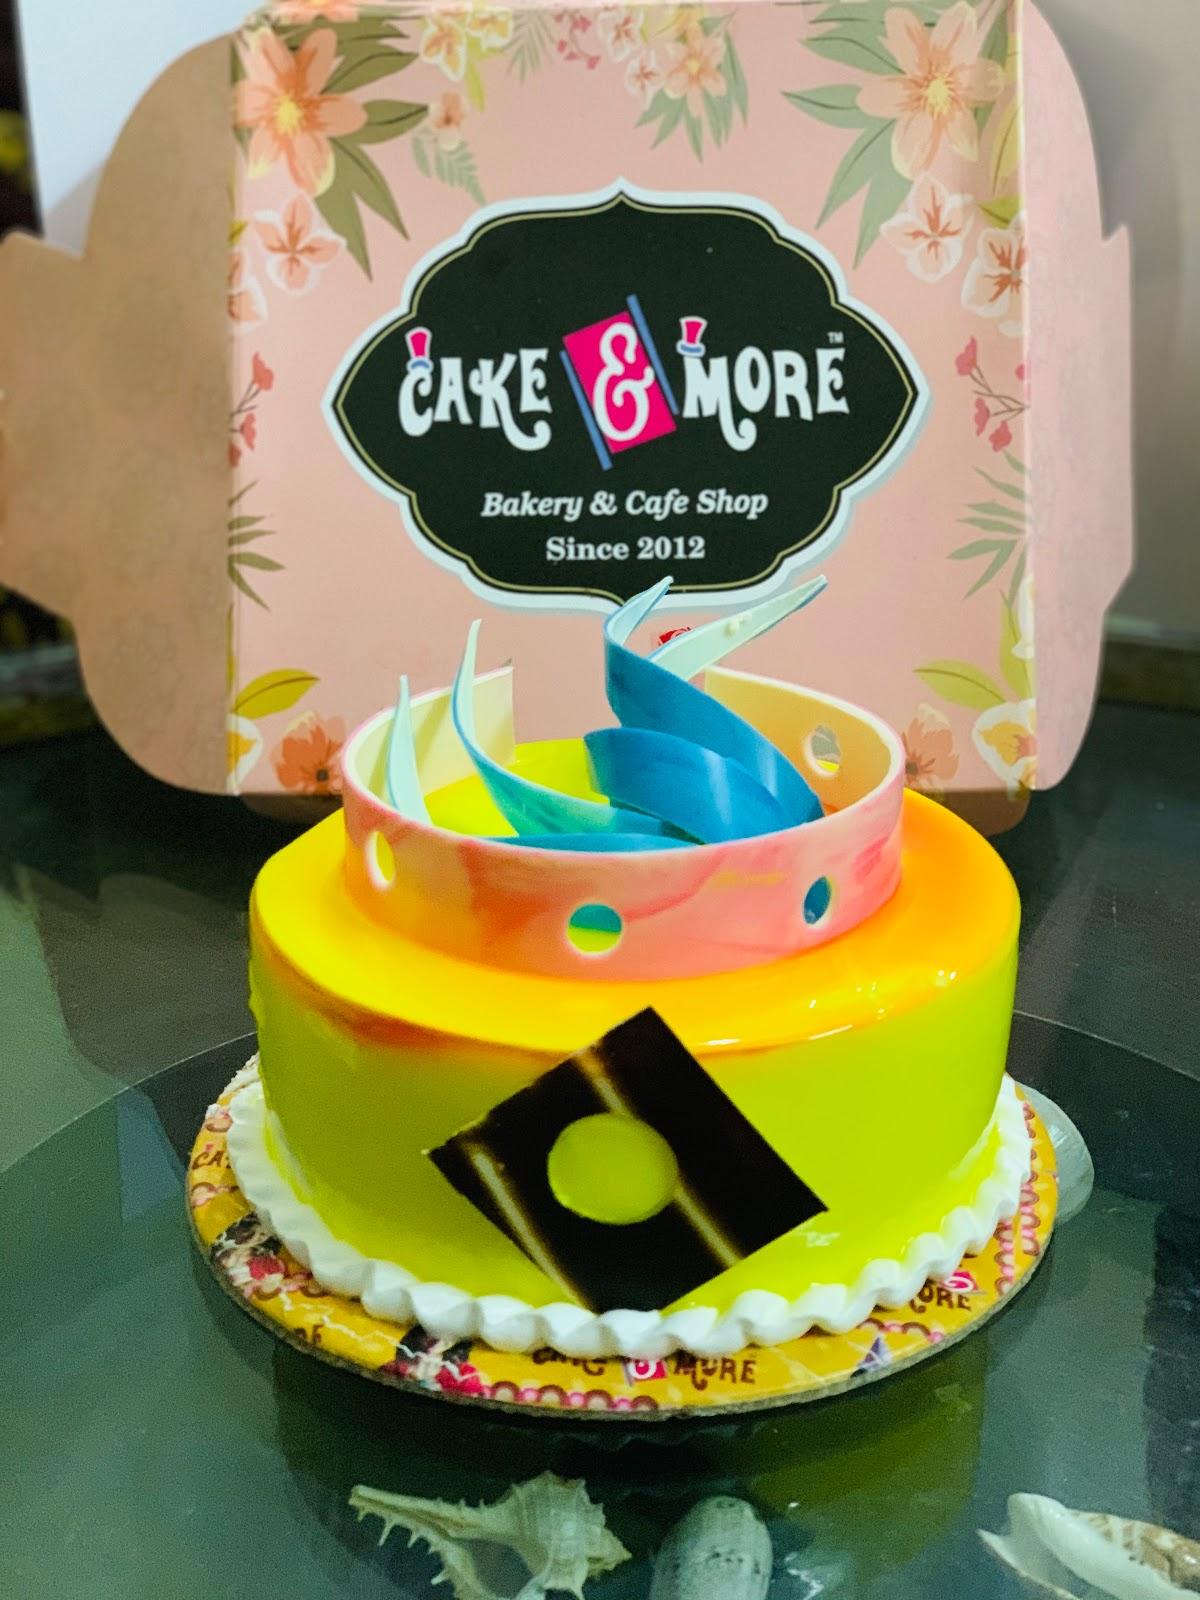 Cake & More - #cakenmore #agra #bakery #cakes | Facebook